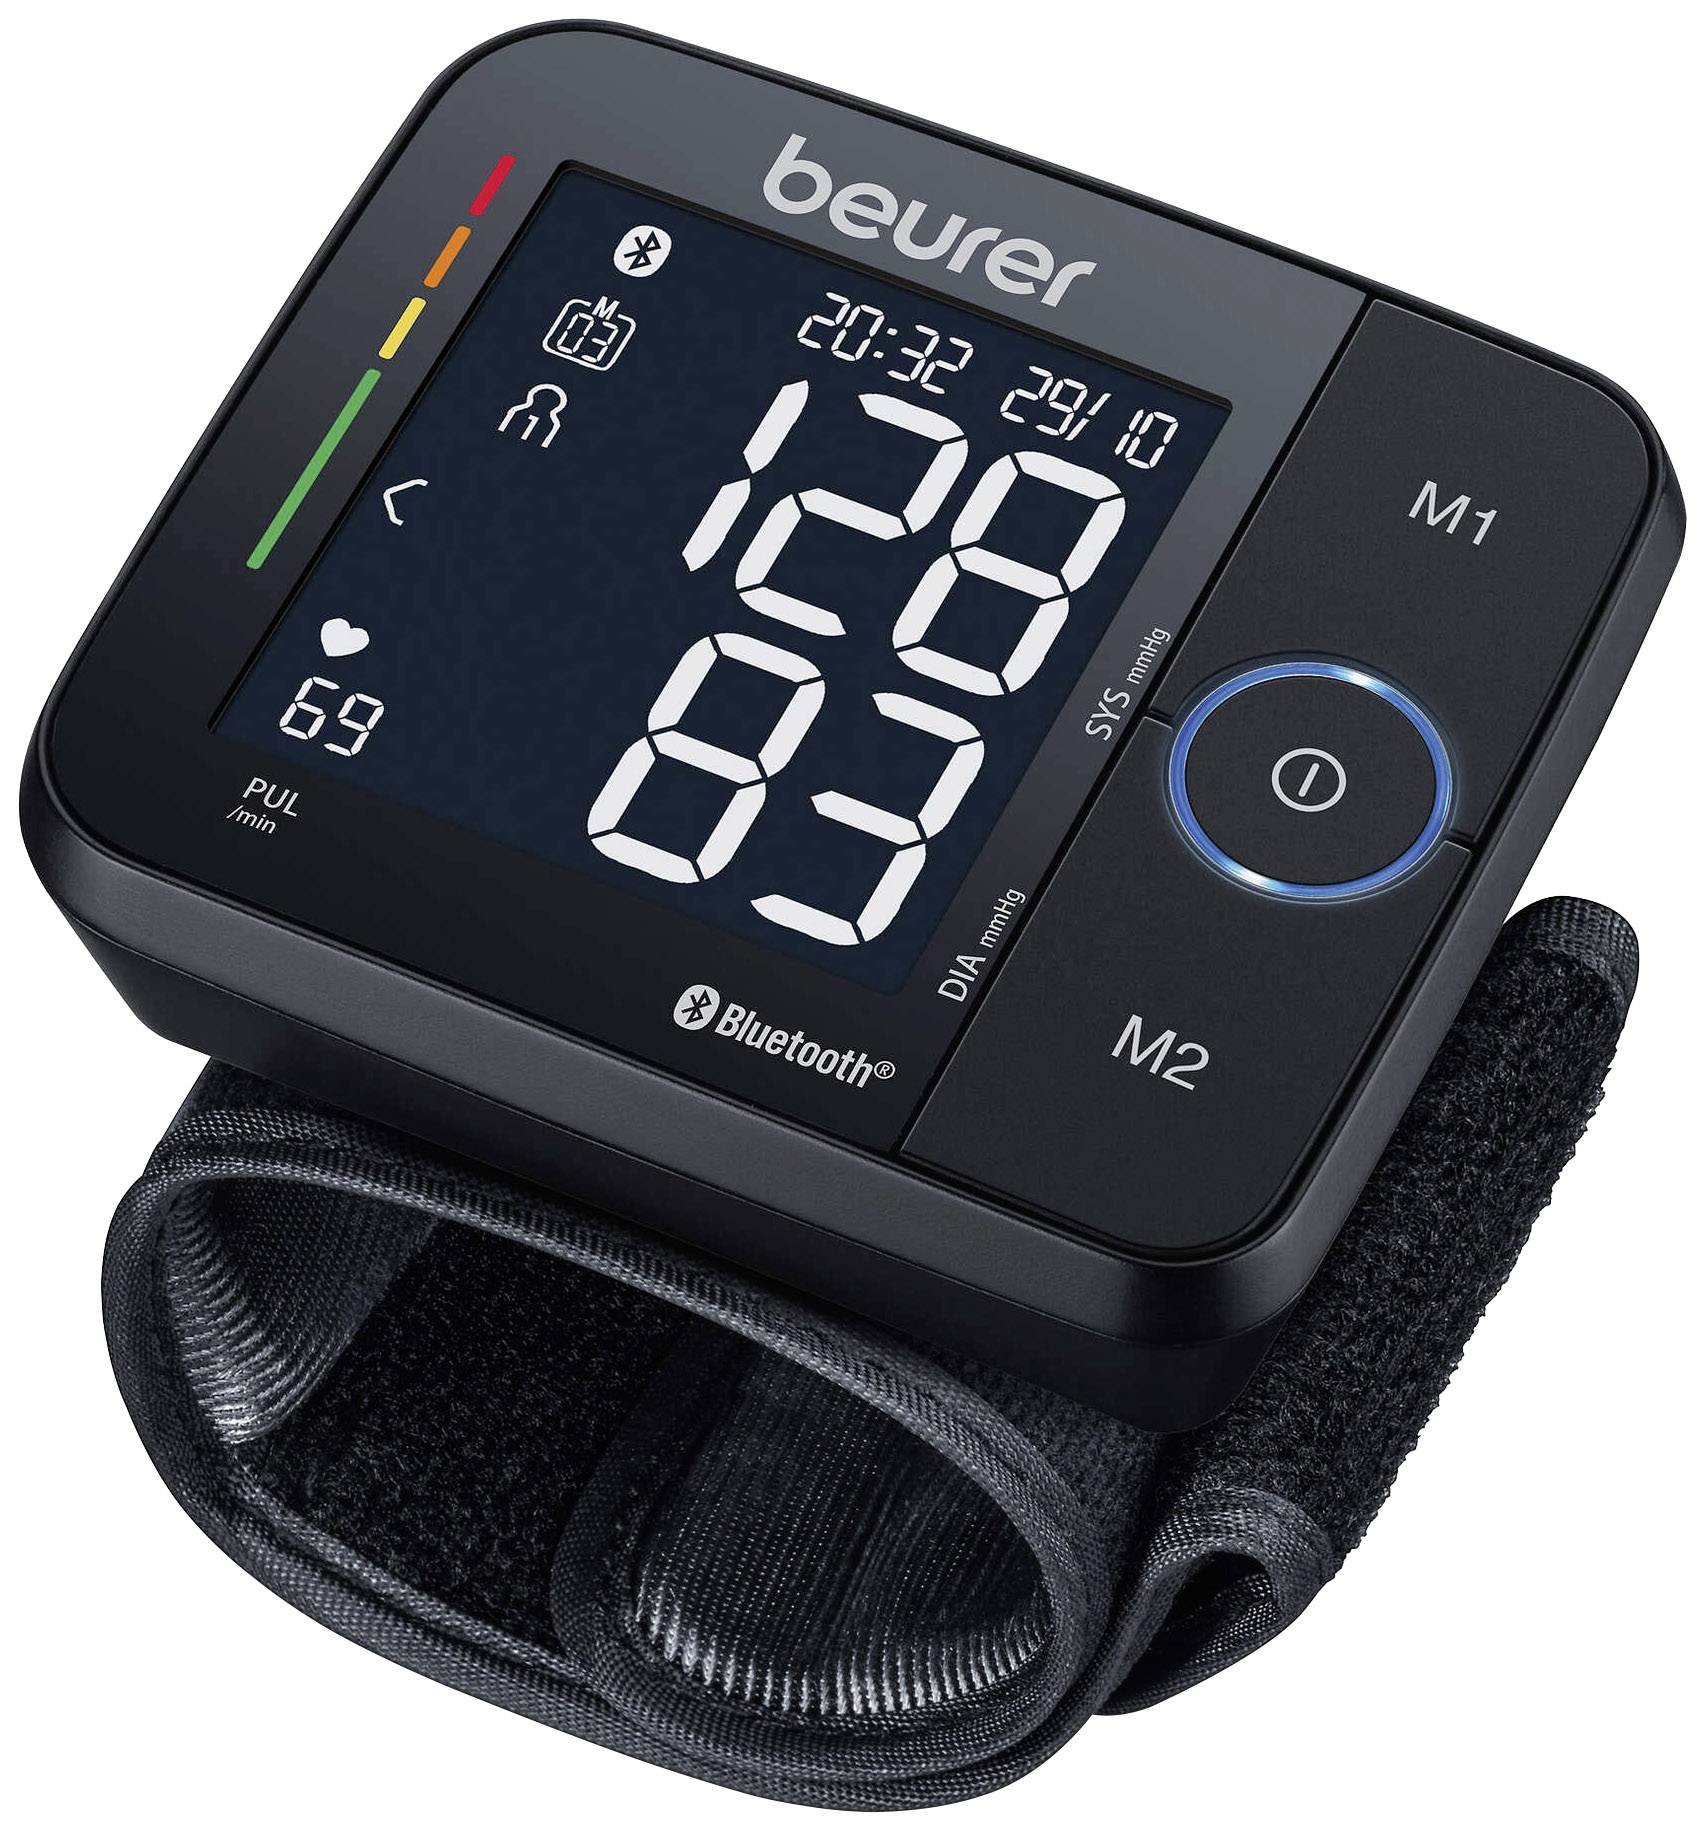 Beurer BP Monitor